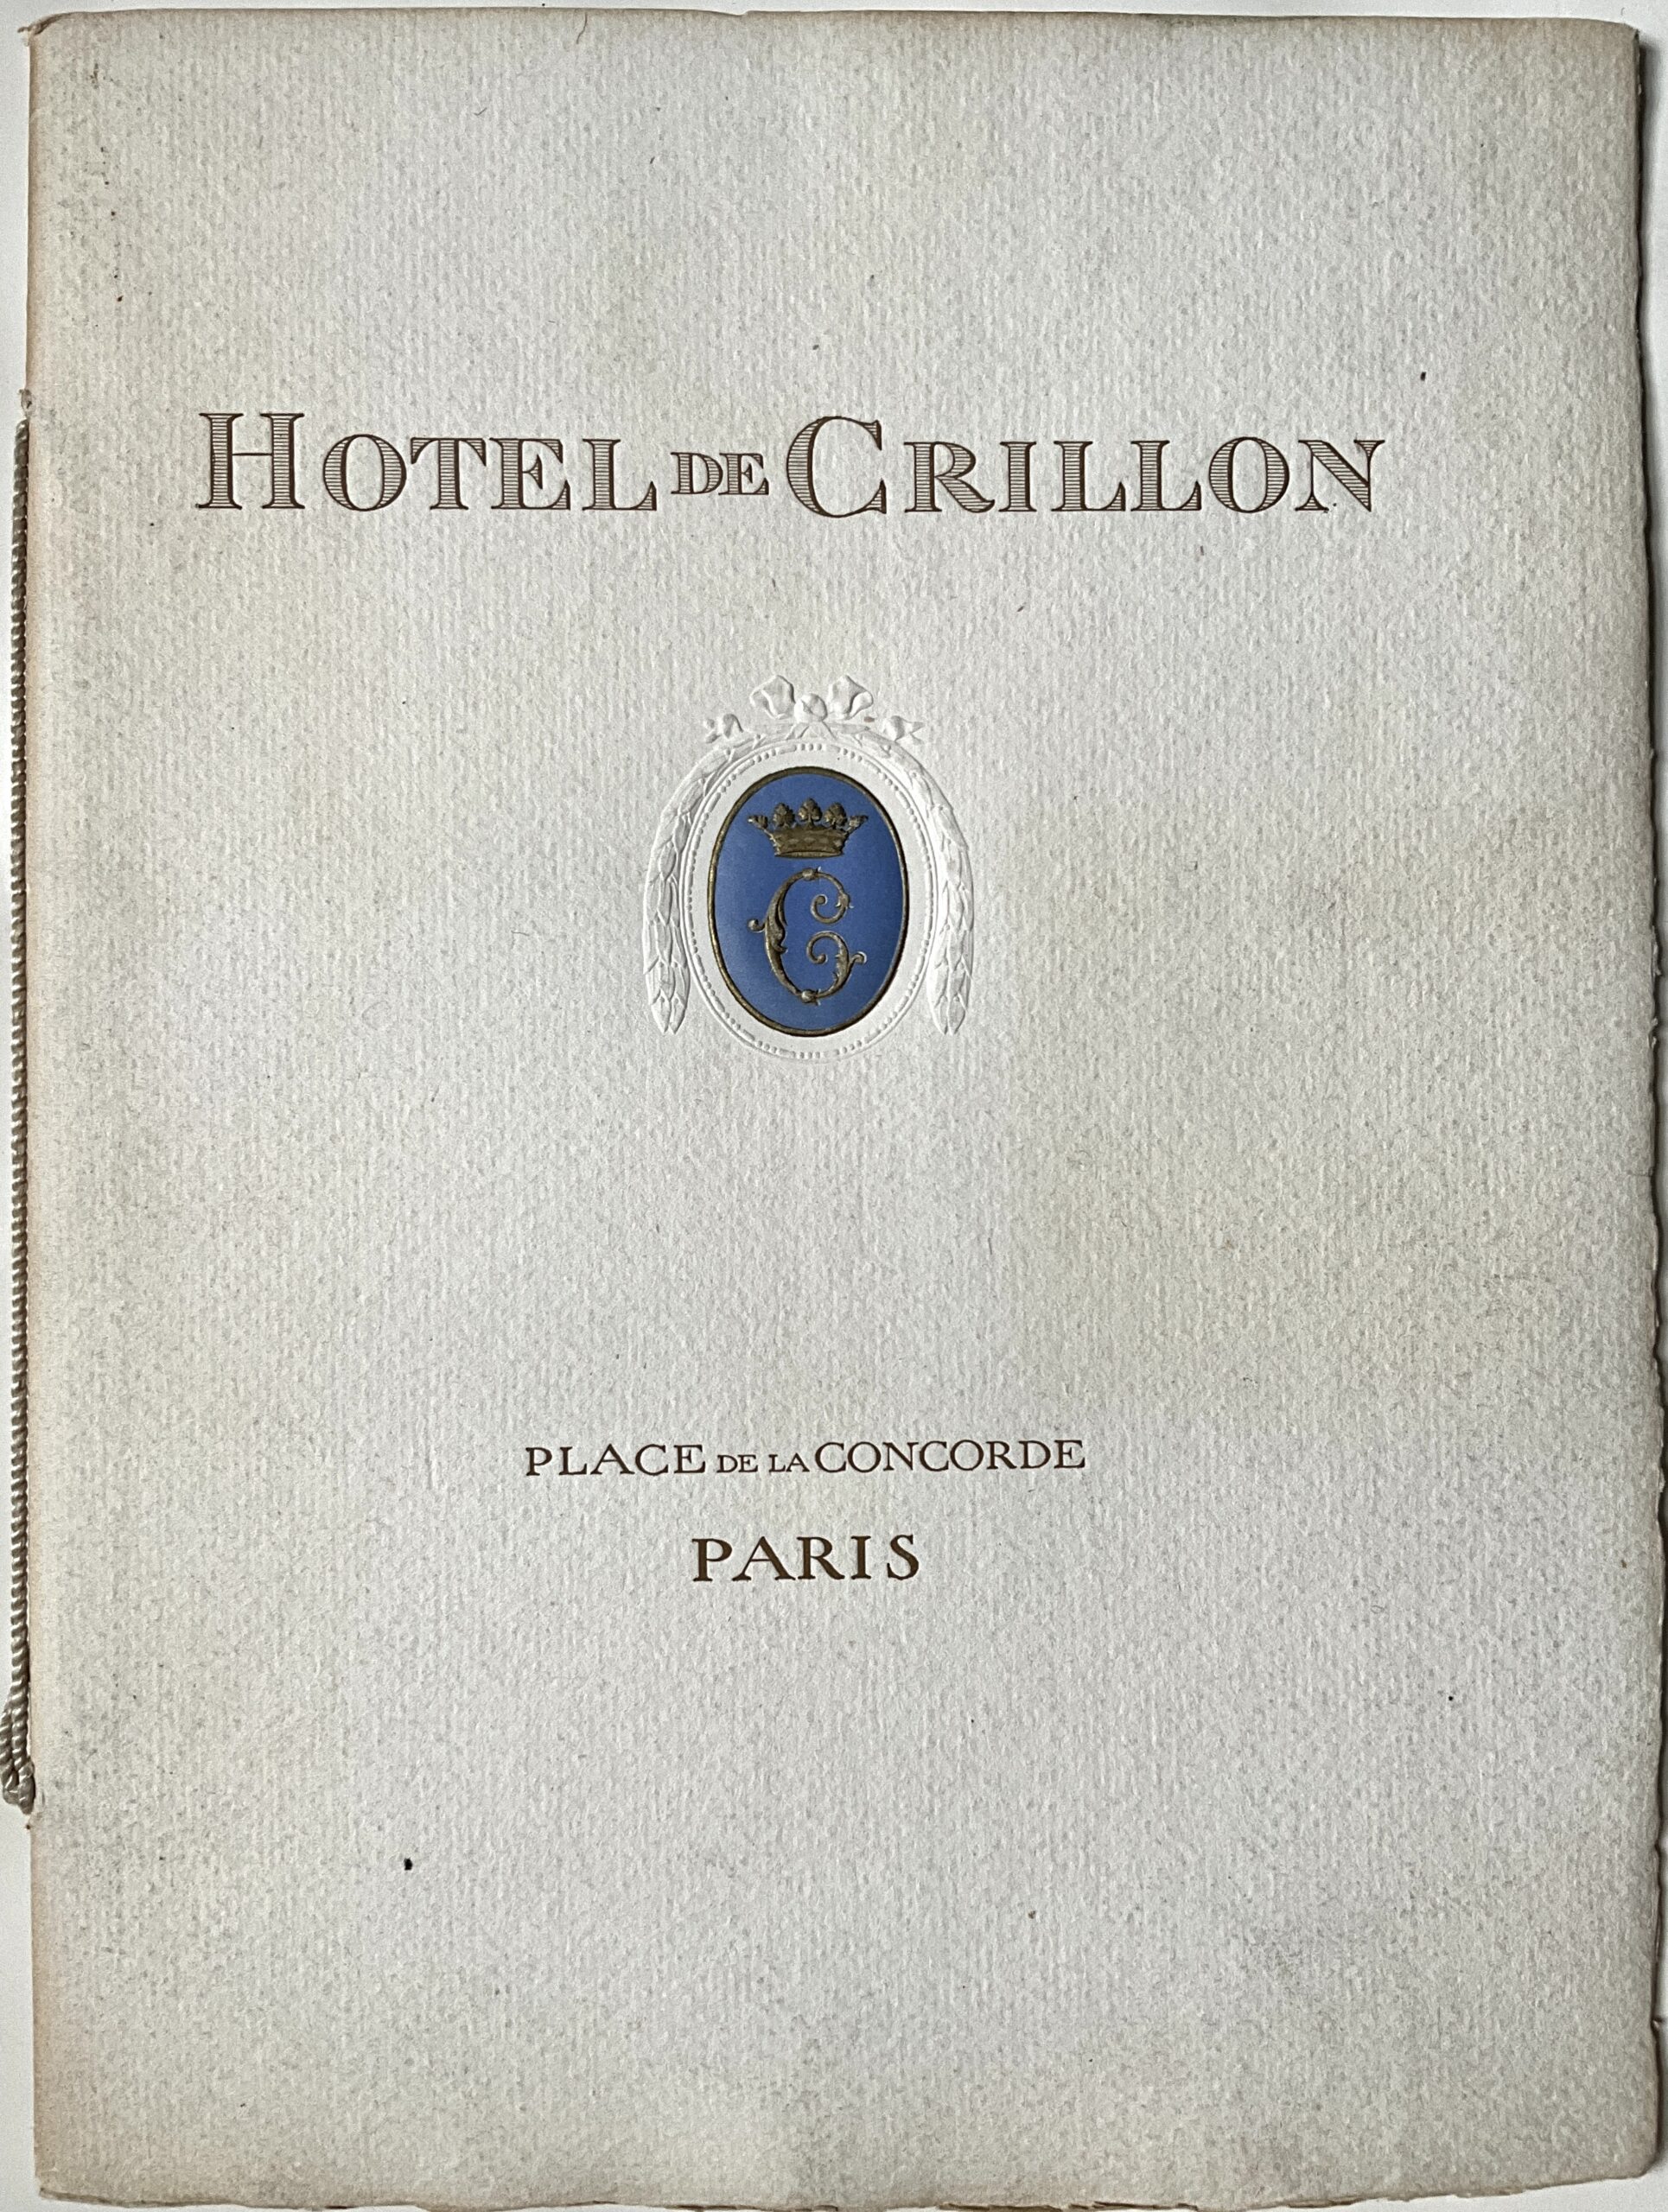 ST75	HOTEL DE CRILLON - PALACE DE LA CONCORDE - PARIS - BROCHURE BOOKLET PRINTED BY DREAGER